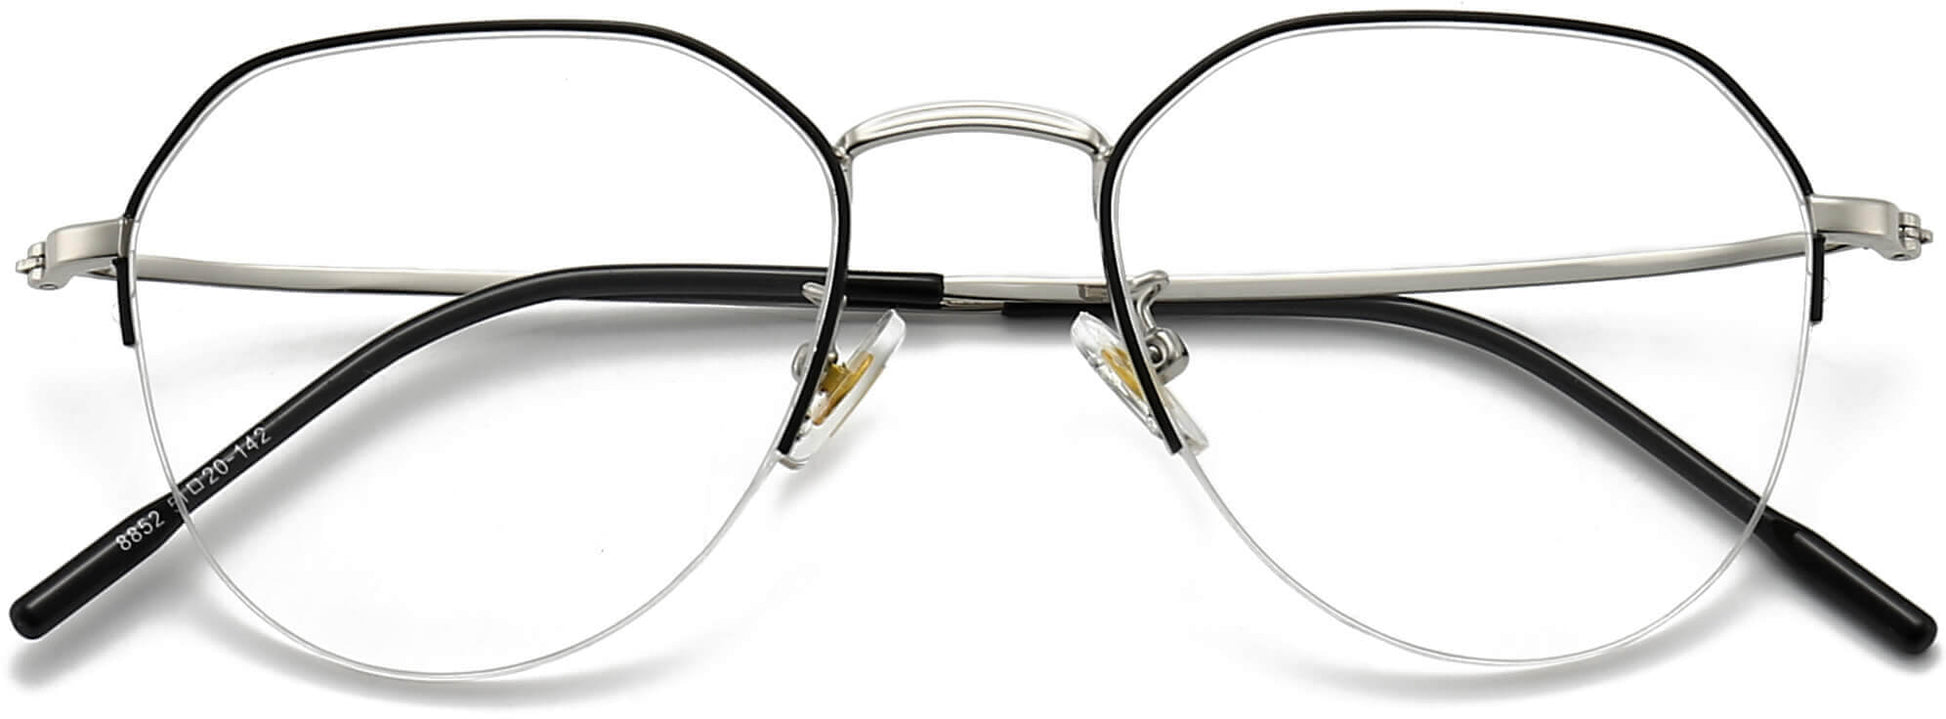 Charles Geometric Black Eyeglasses from ANRRI, closed view